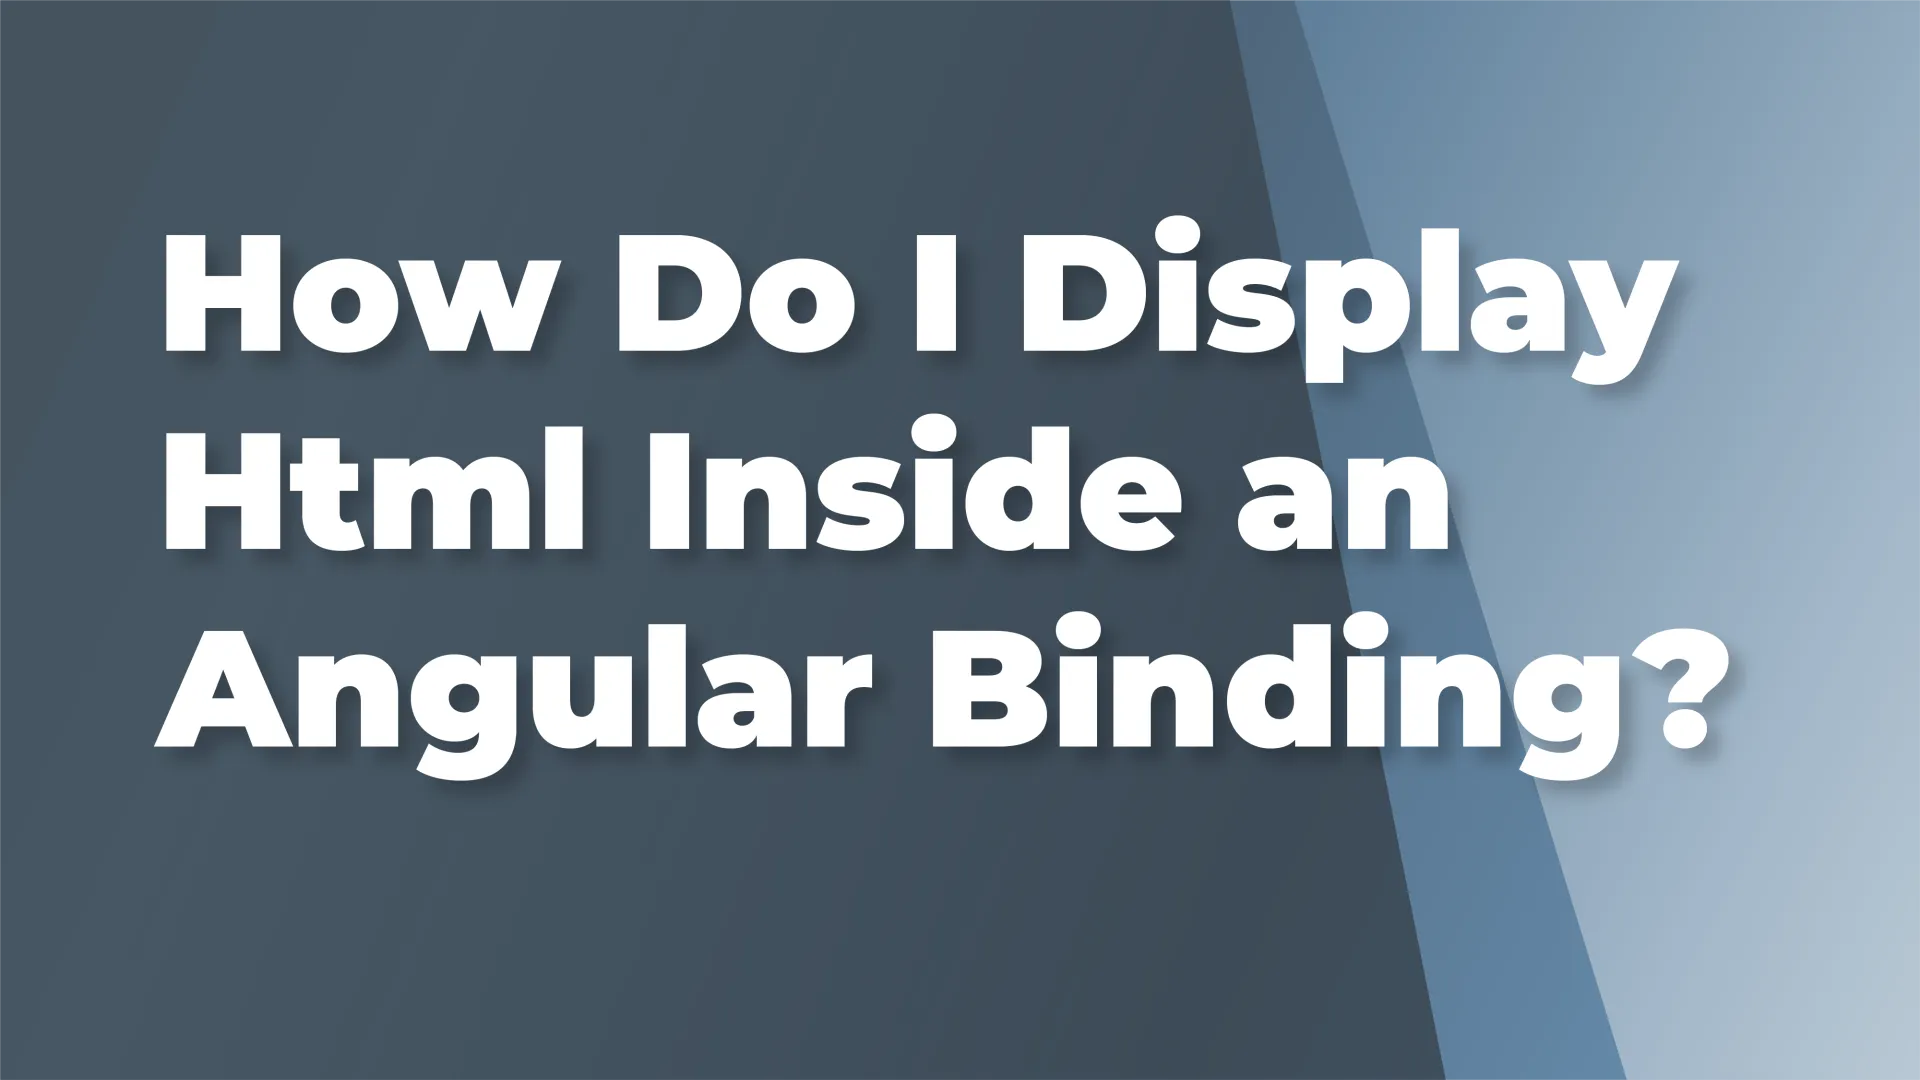 How do I display HTML inside an Angular binding?